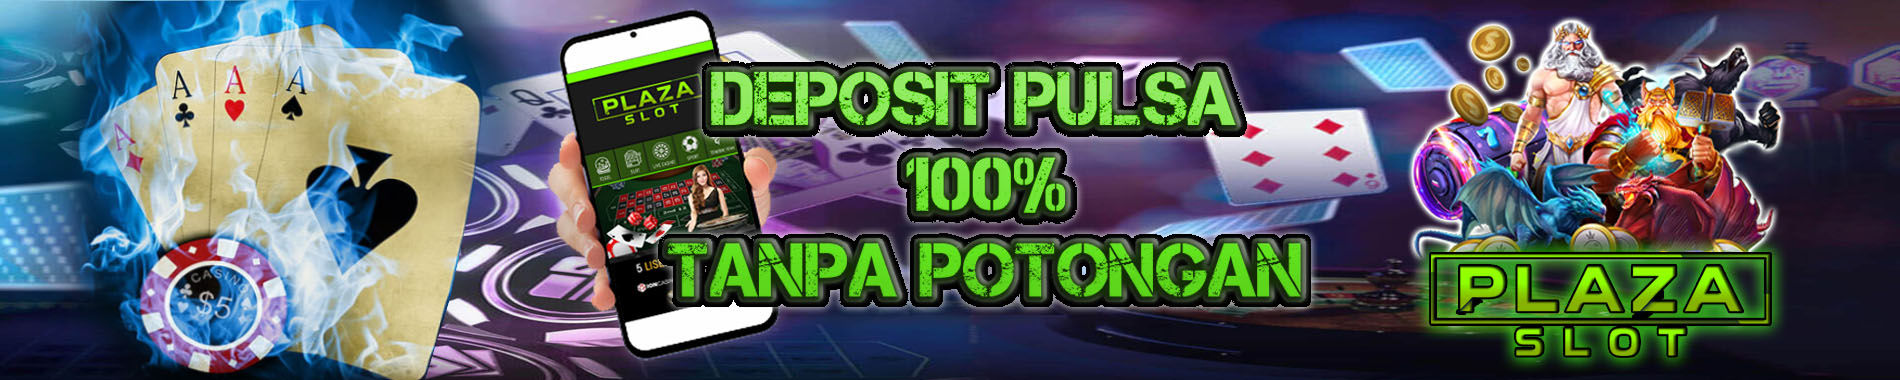 Deposit Pulsa 100% Tanpa Potongan